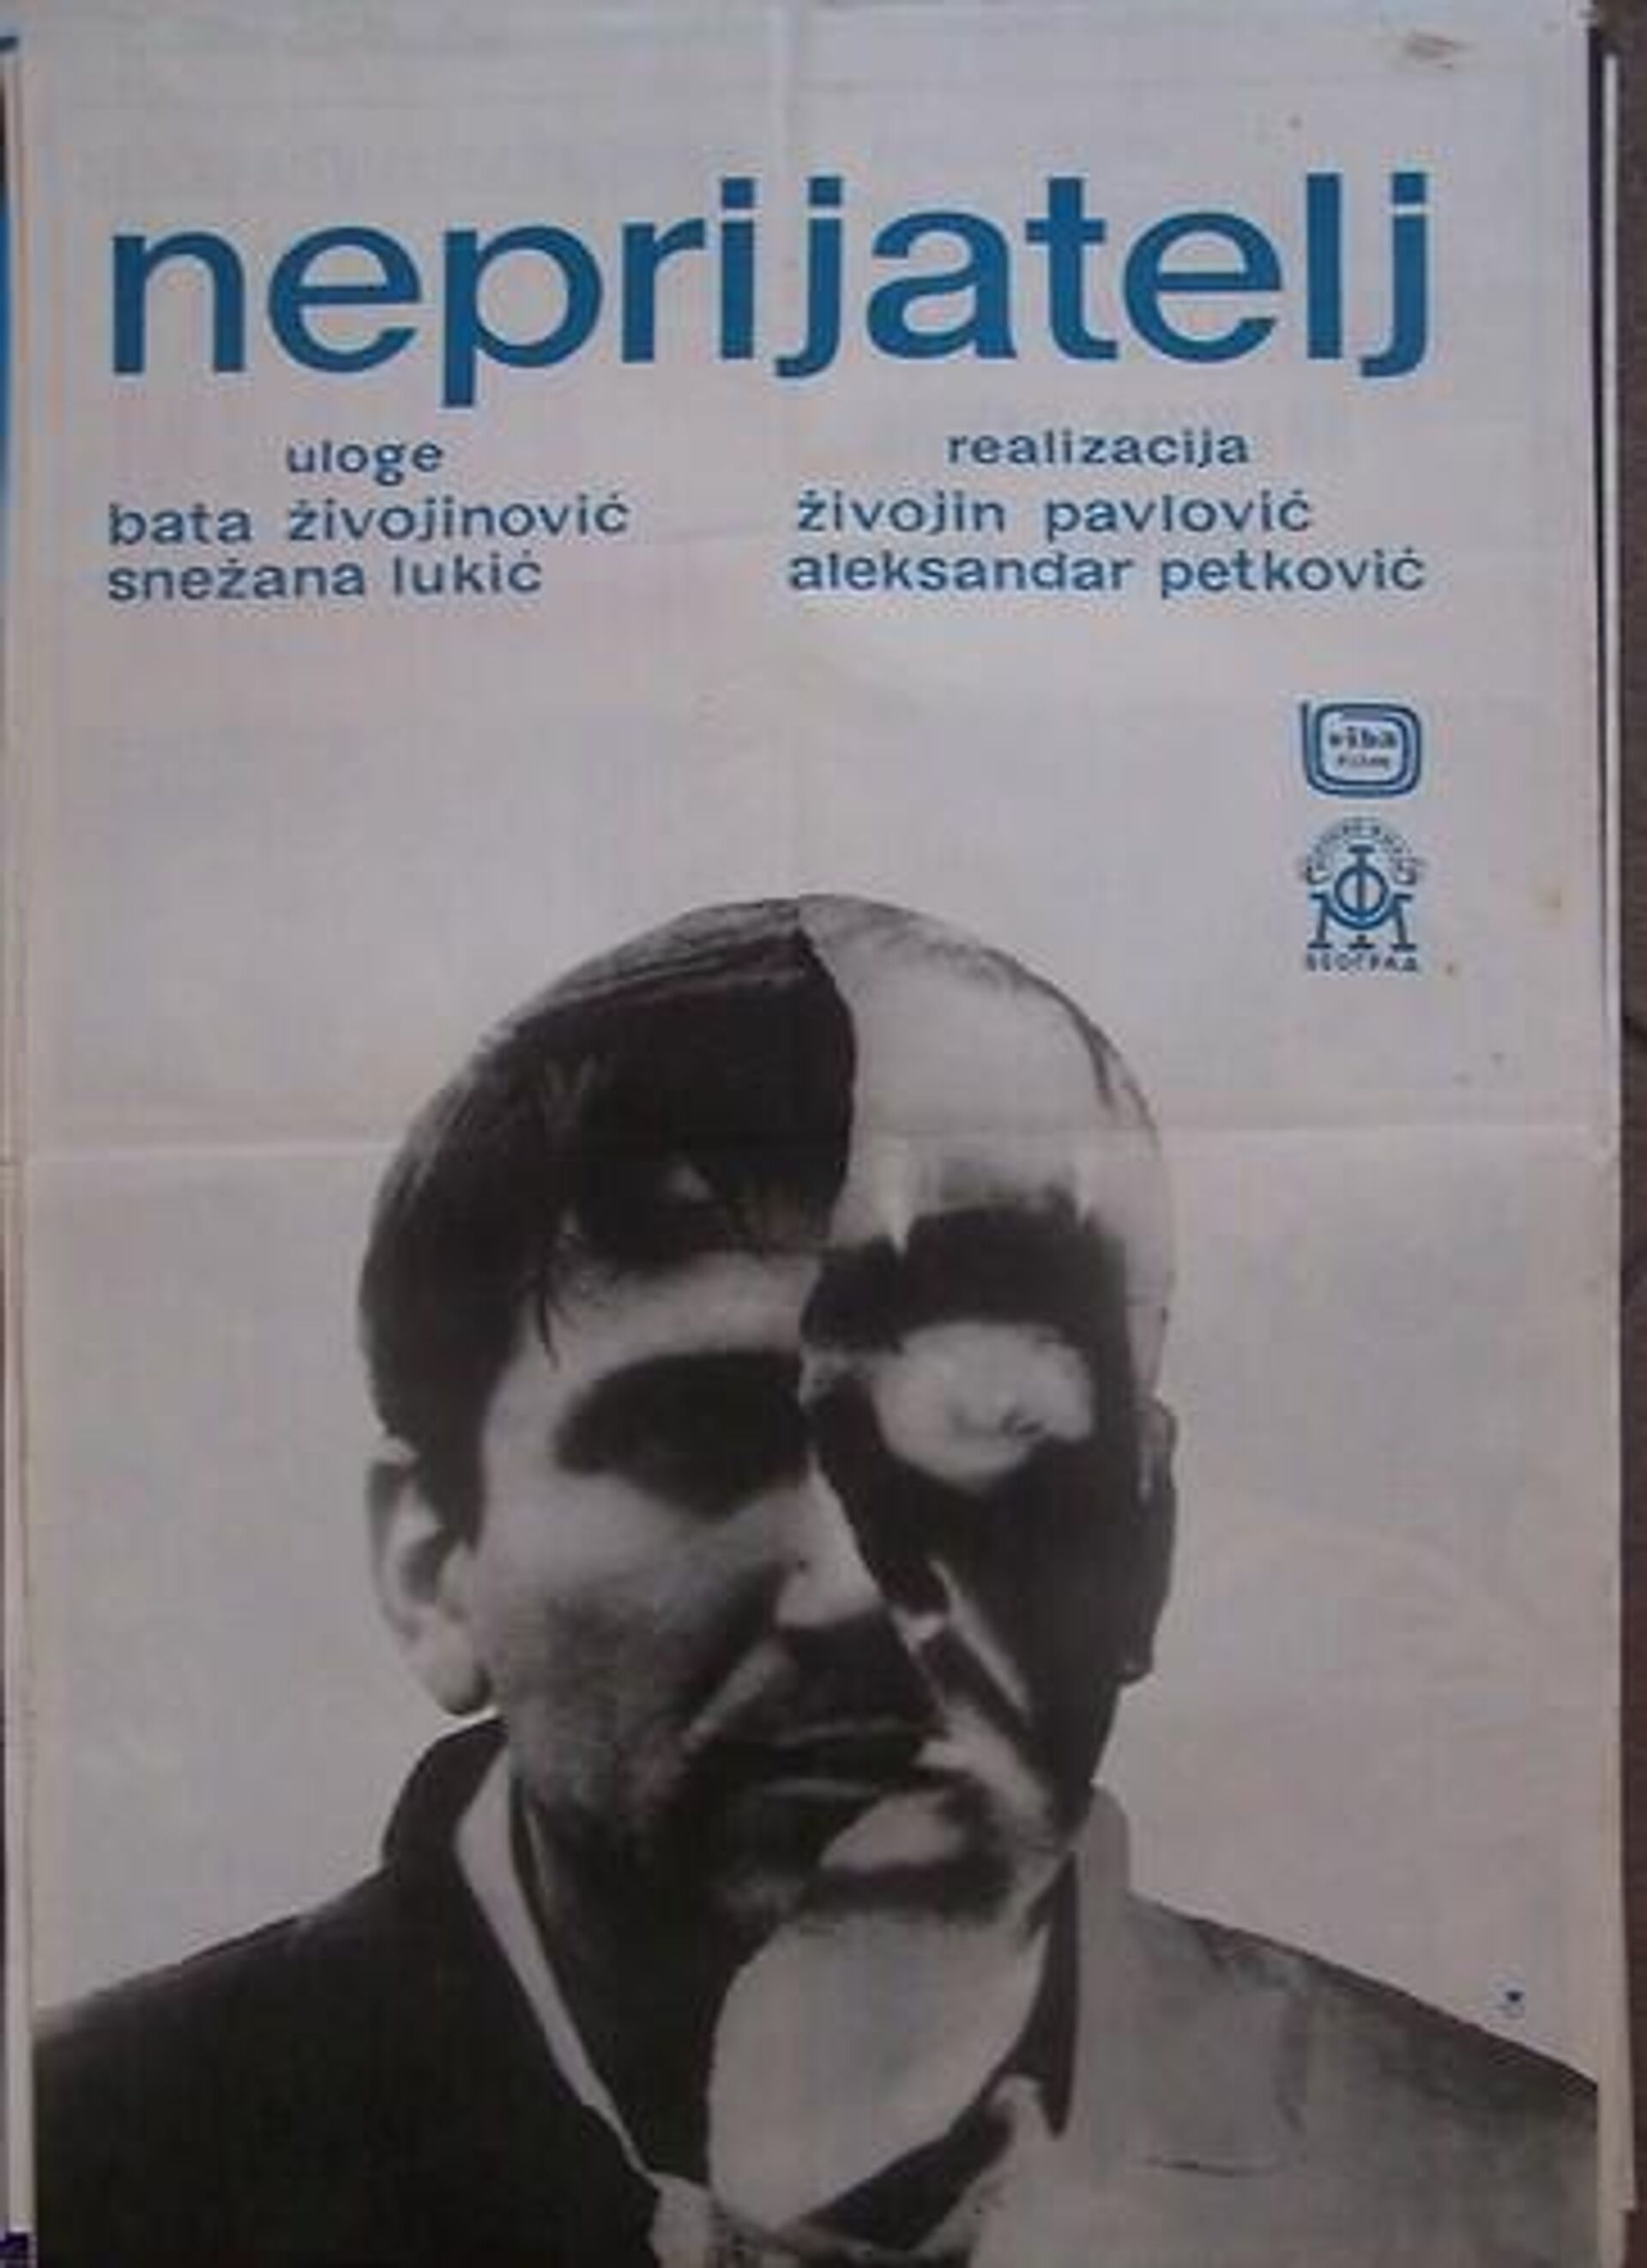 Постер за филм Непријатељ (1965) - Sputnik Србија, 1920, 16.11.2021